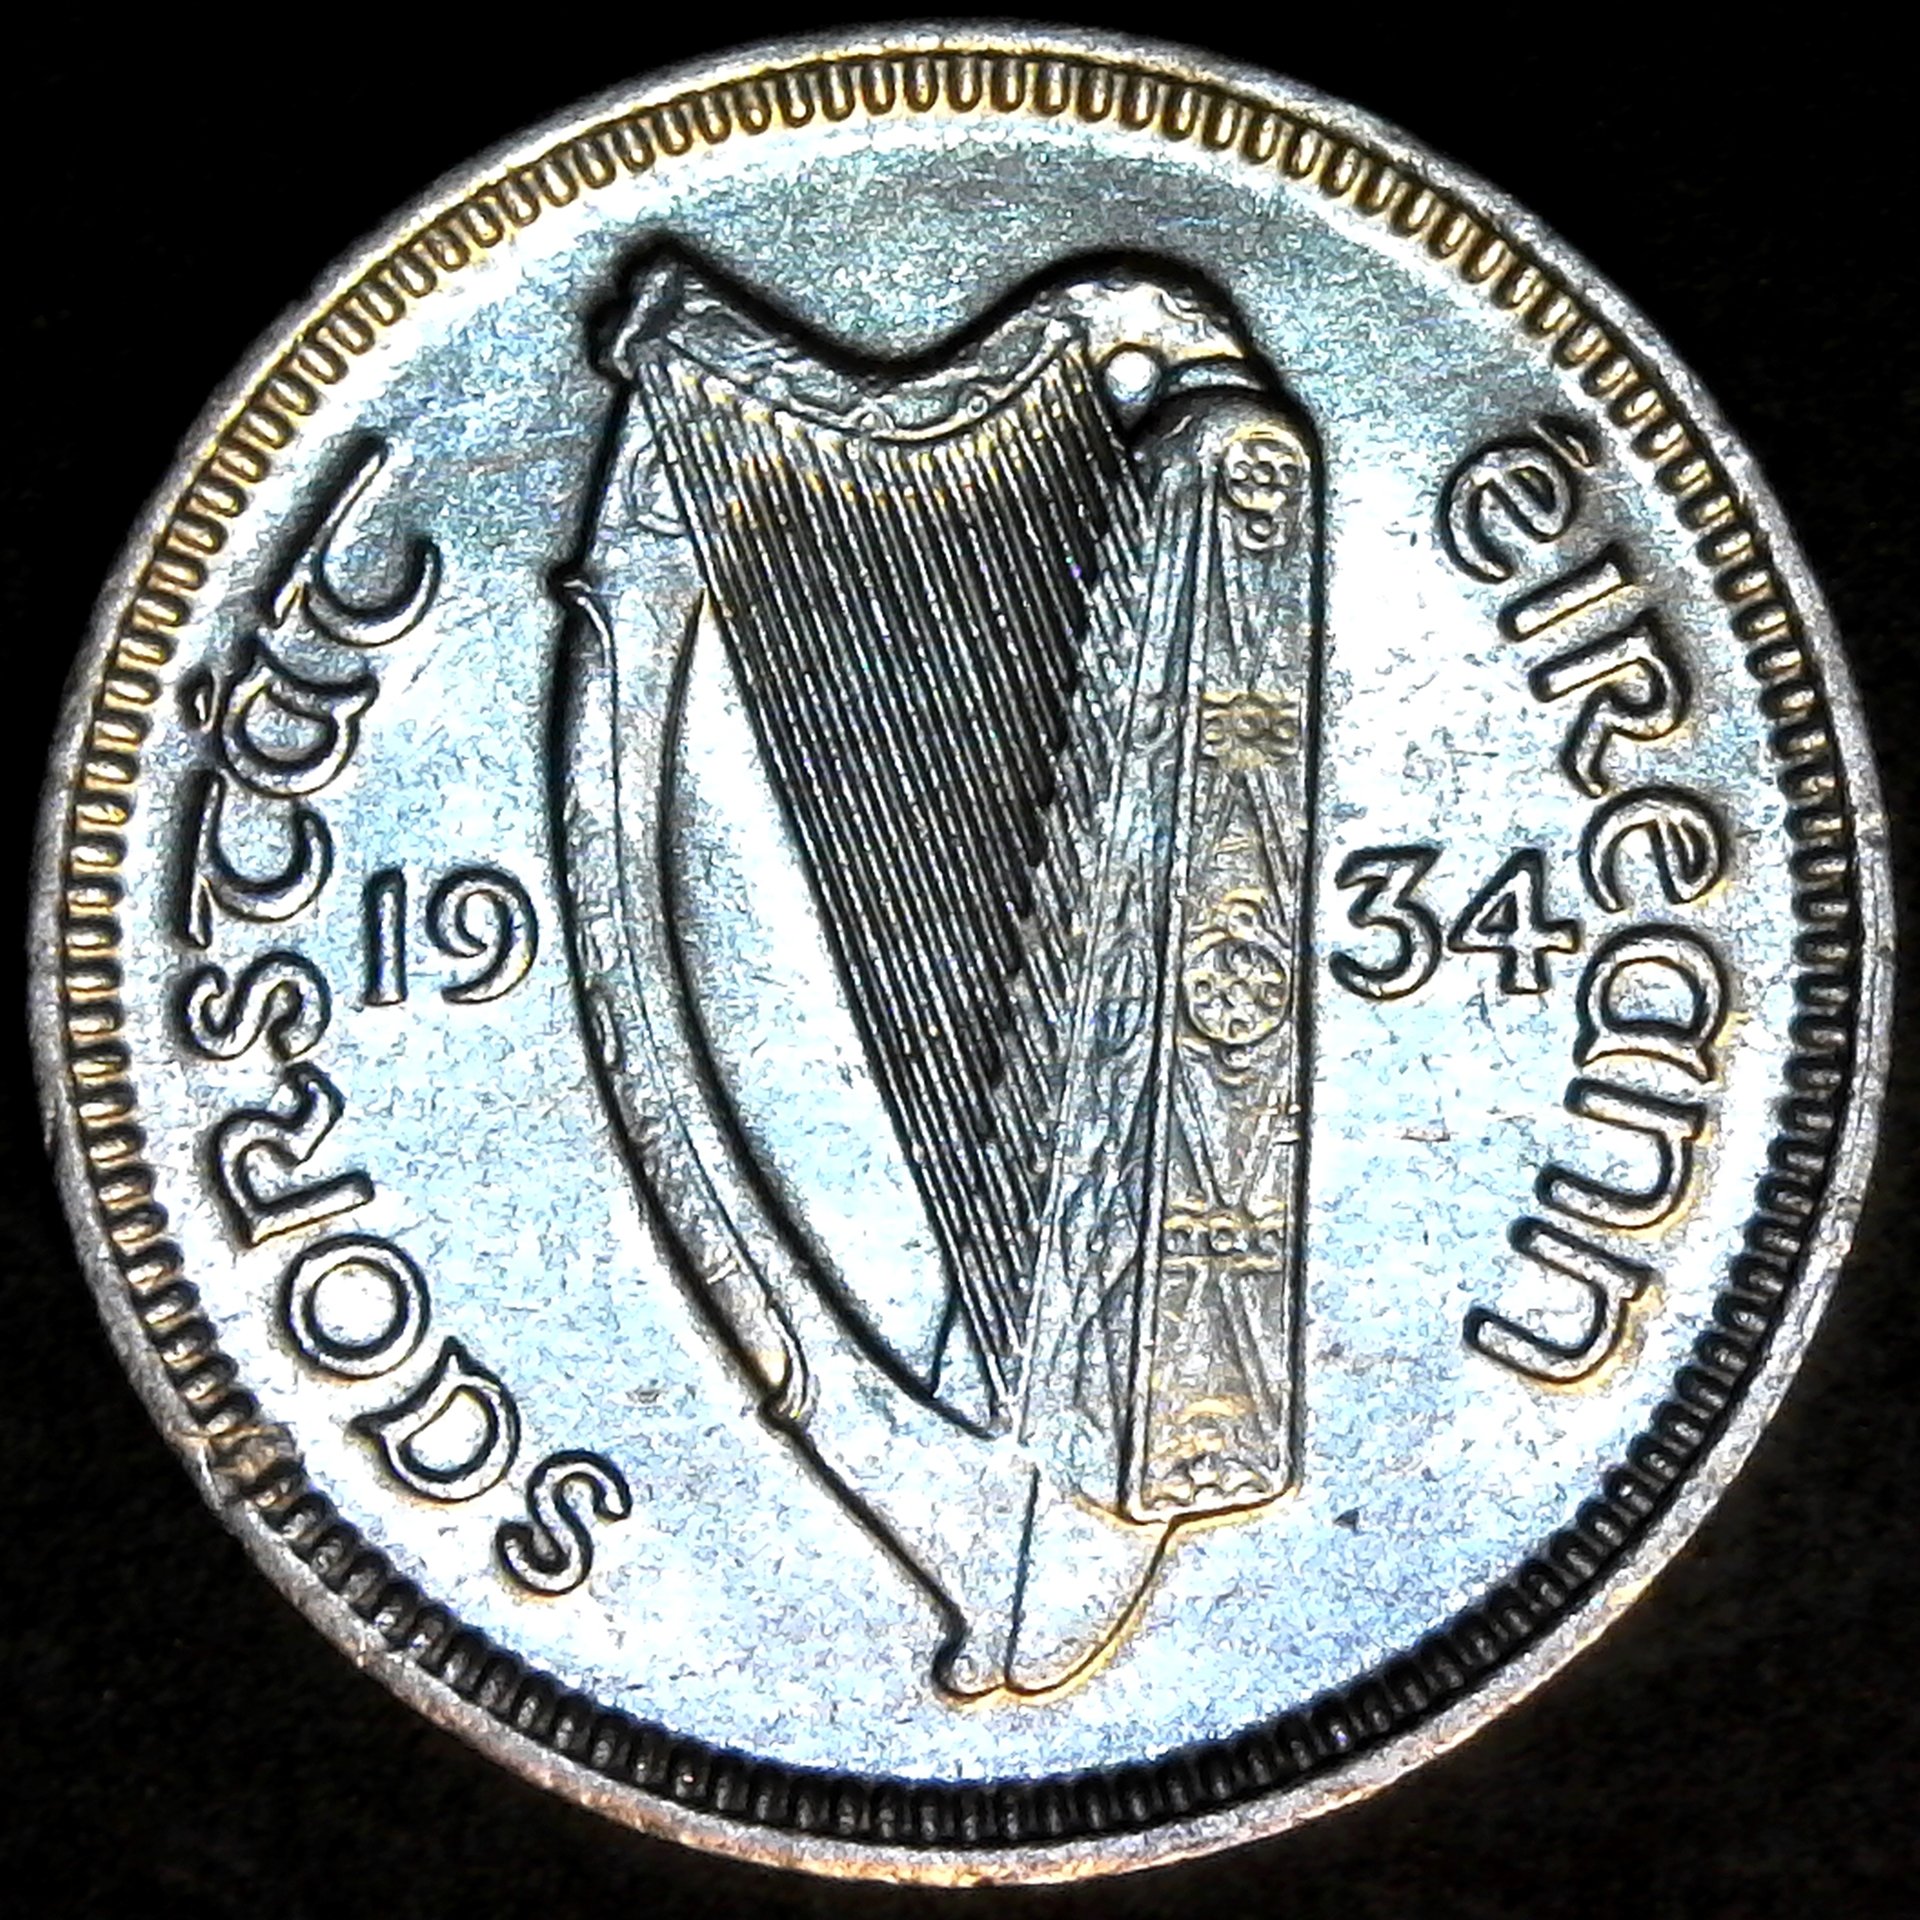 Ireland 3 Pence 1928 rev.jpg